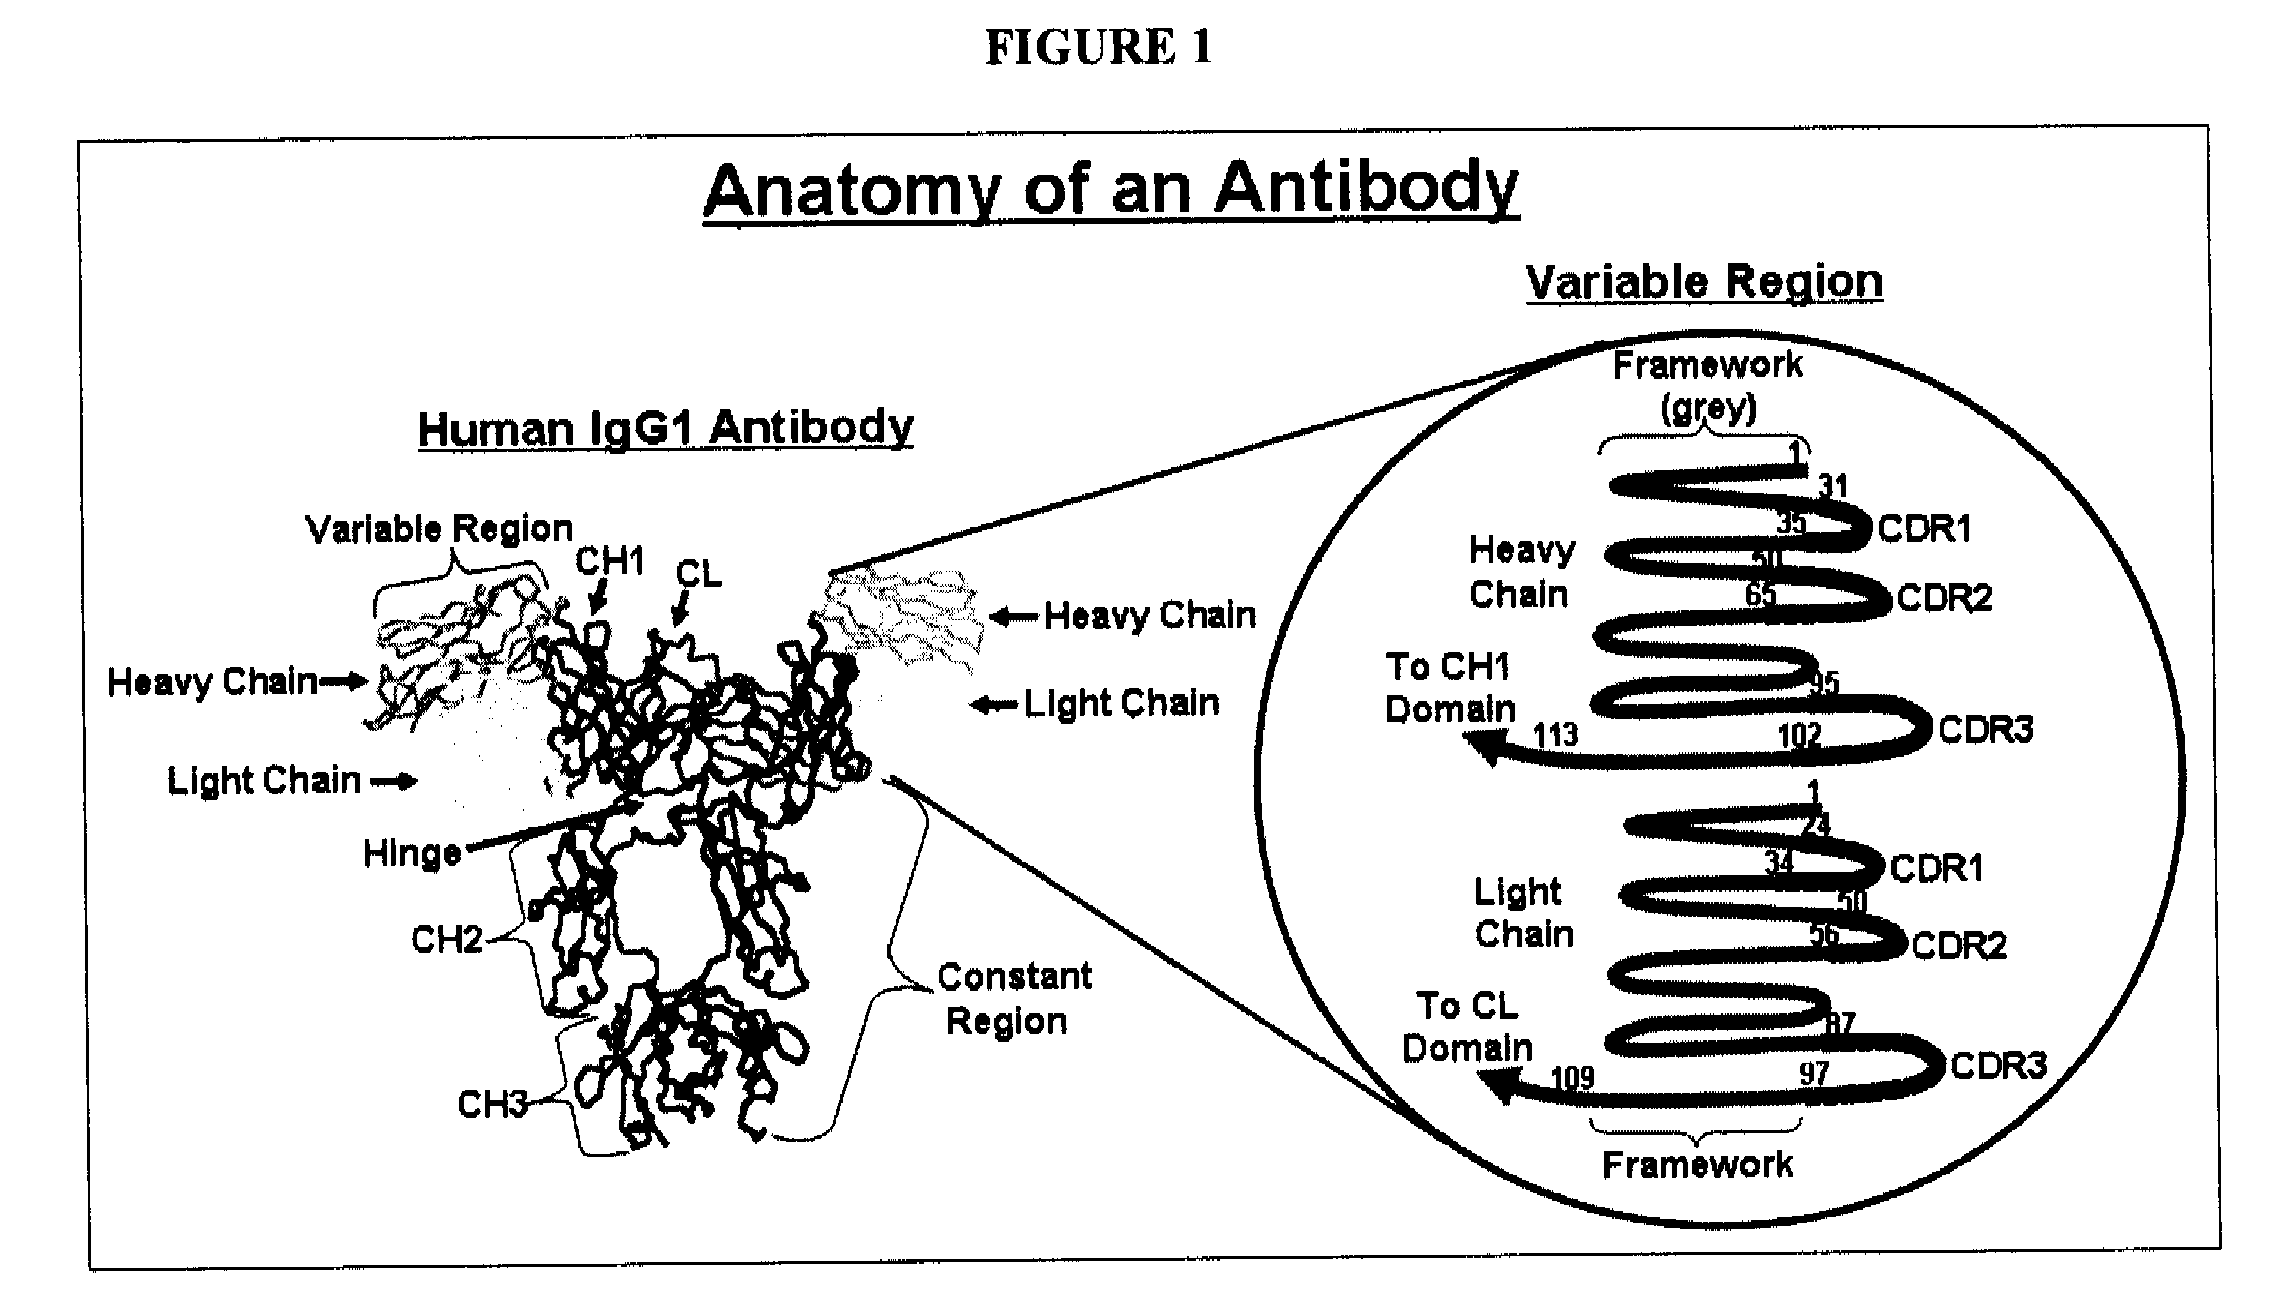 Methods for improving antibody production